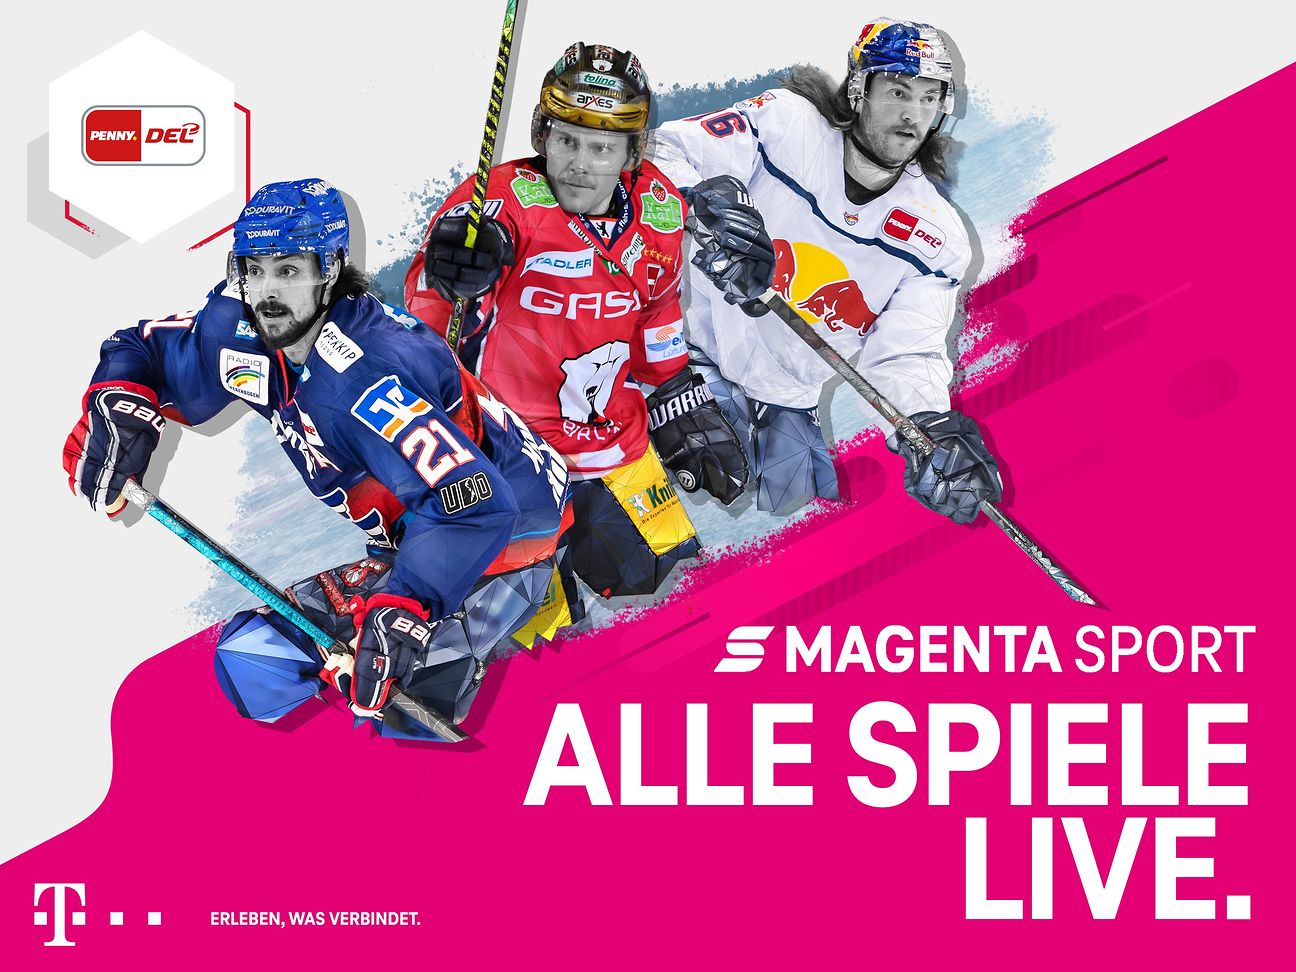 PENNY DEL startet MagentaSport zeigt Non-Stop alle Spiele live Deutsche Telekom